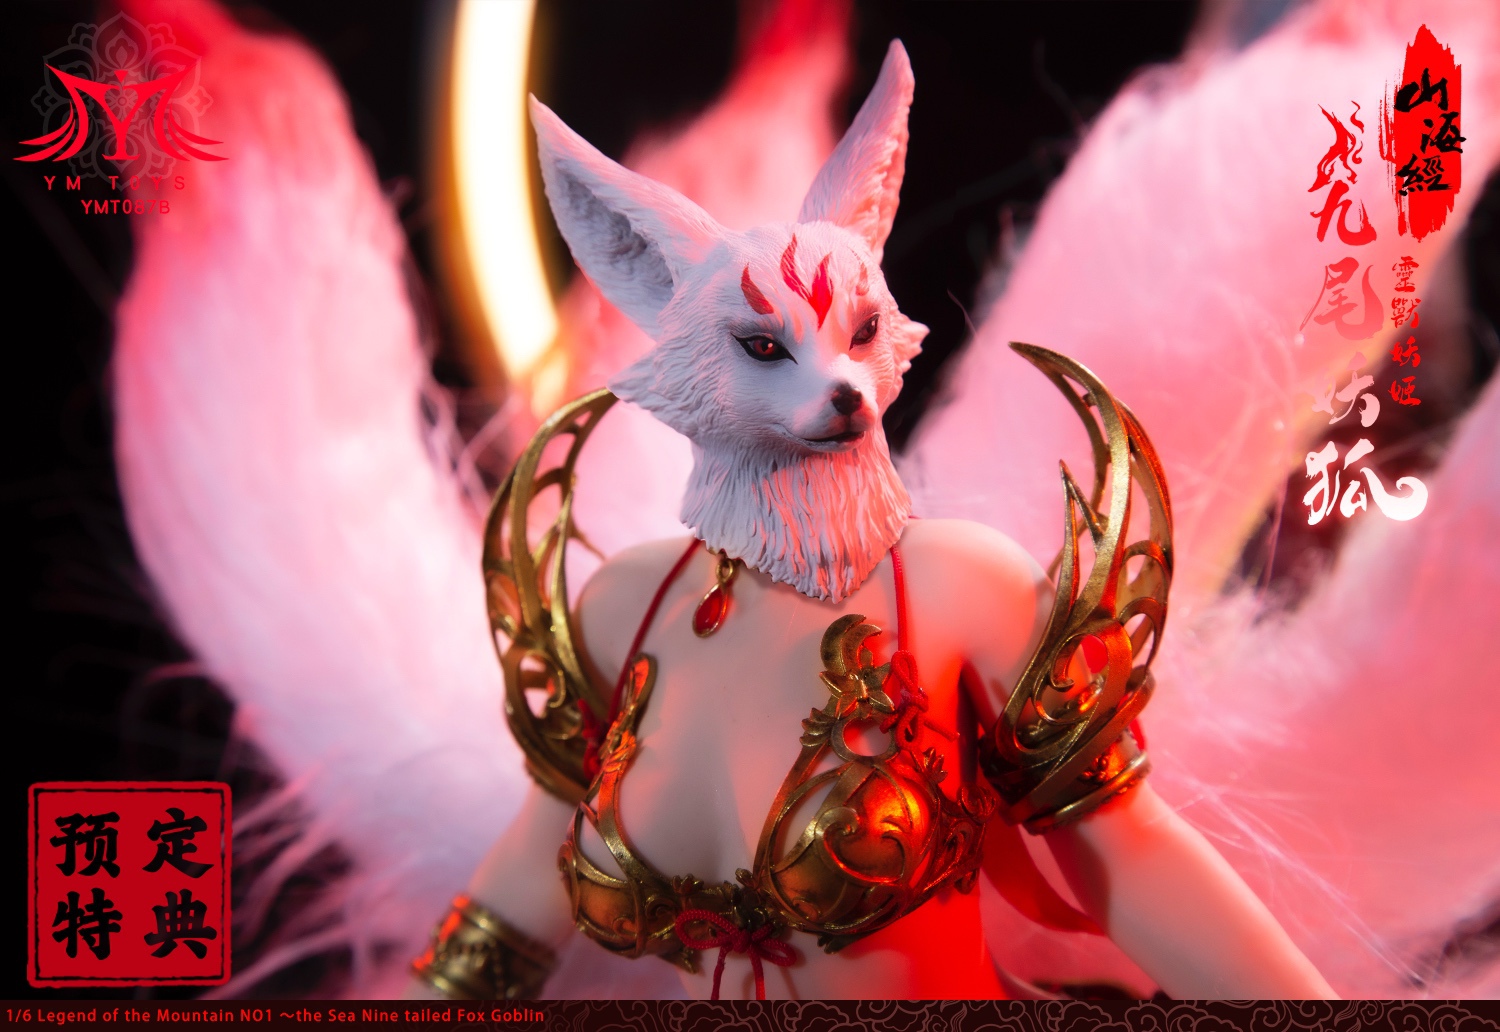 NEW PRODUCT: YMTOYS - Shanhaijing series first bullet - spirit beast demon concubine nine-tailed demon fox 2429